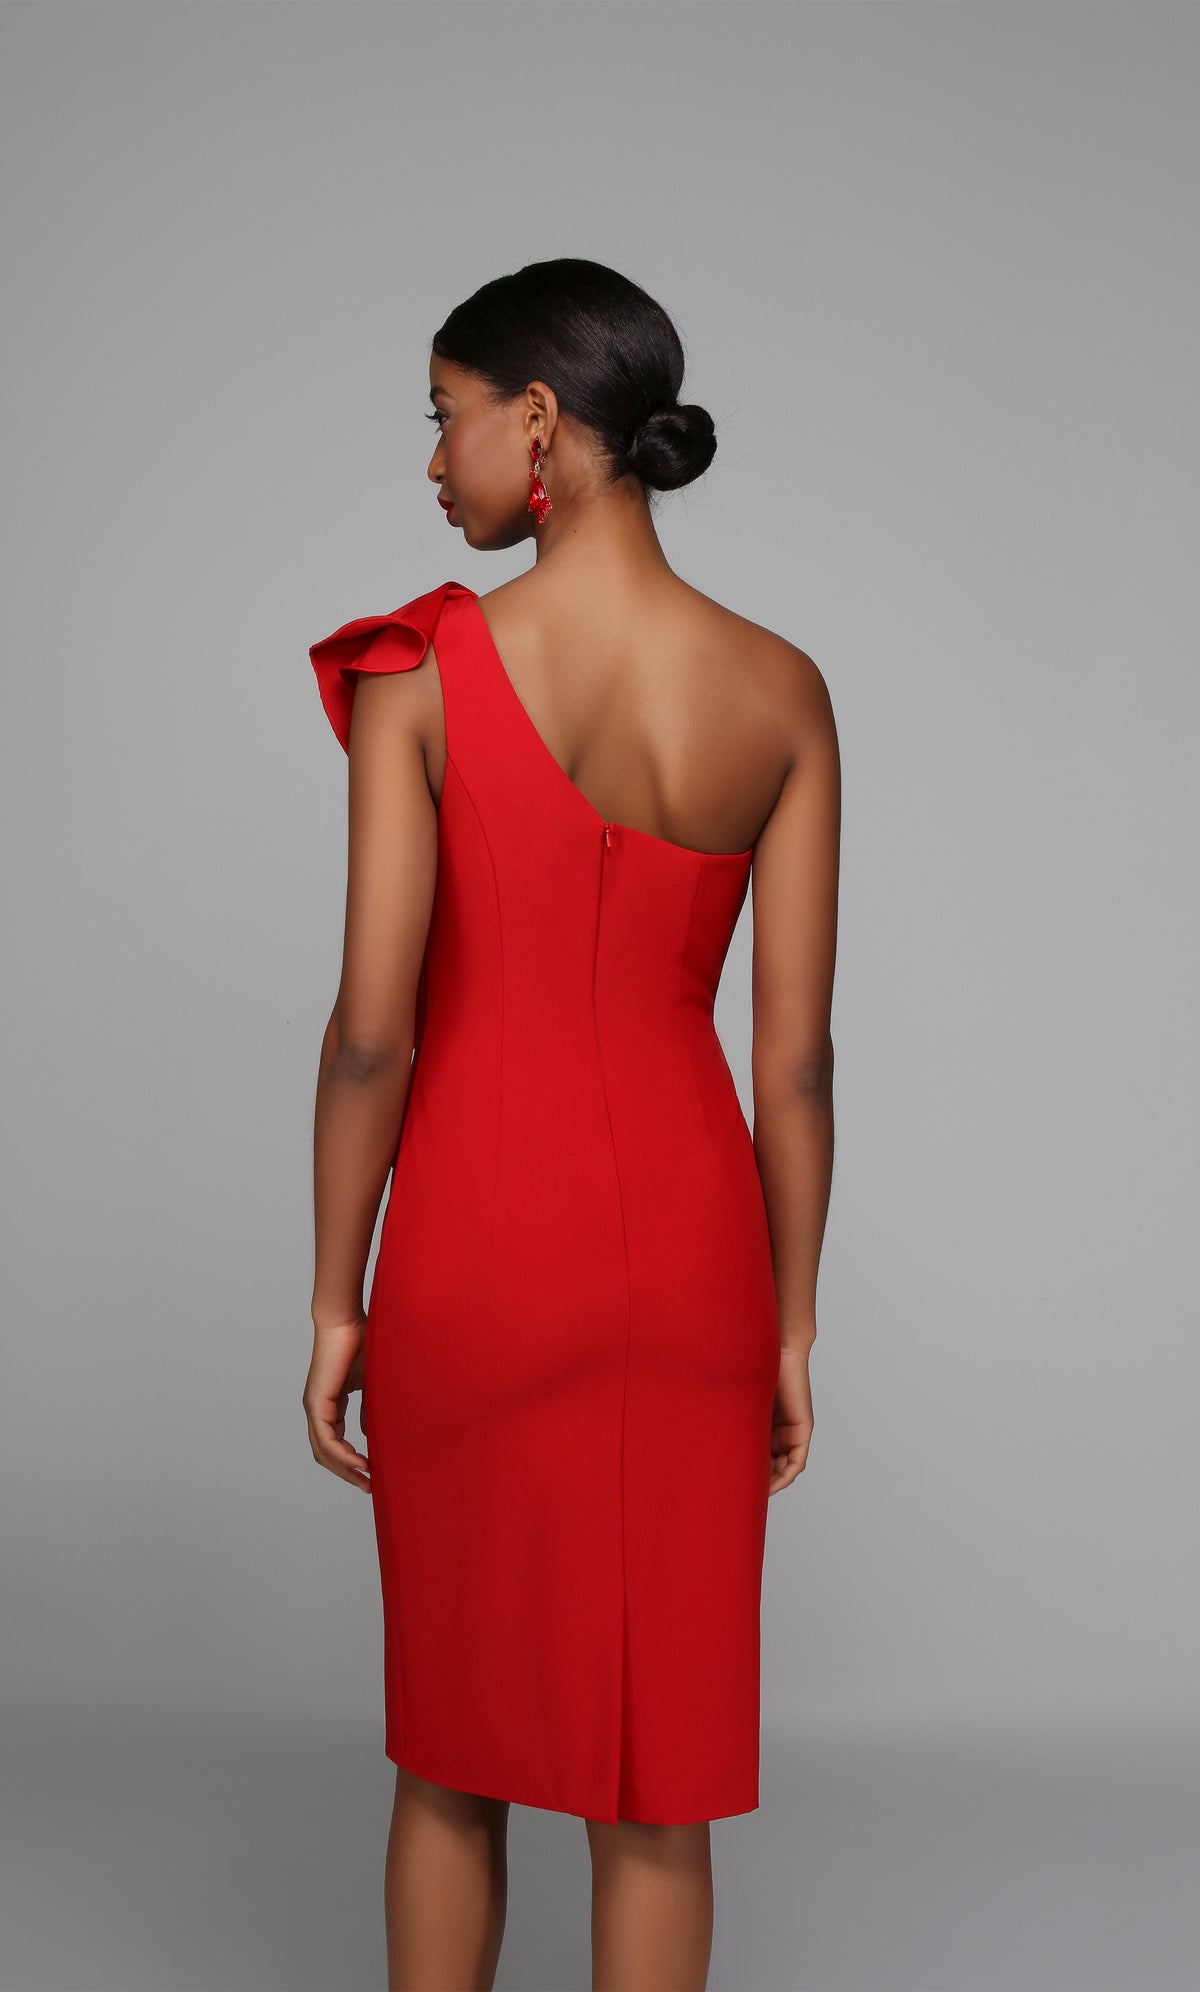 Red one shoulder cocktail dress enhanced with a zip up back and back slit.